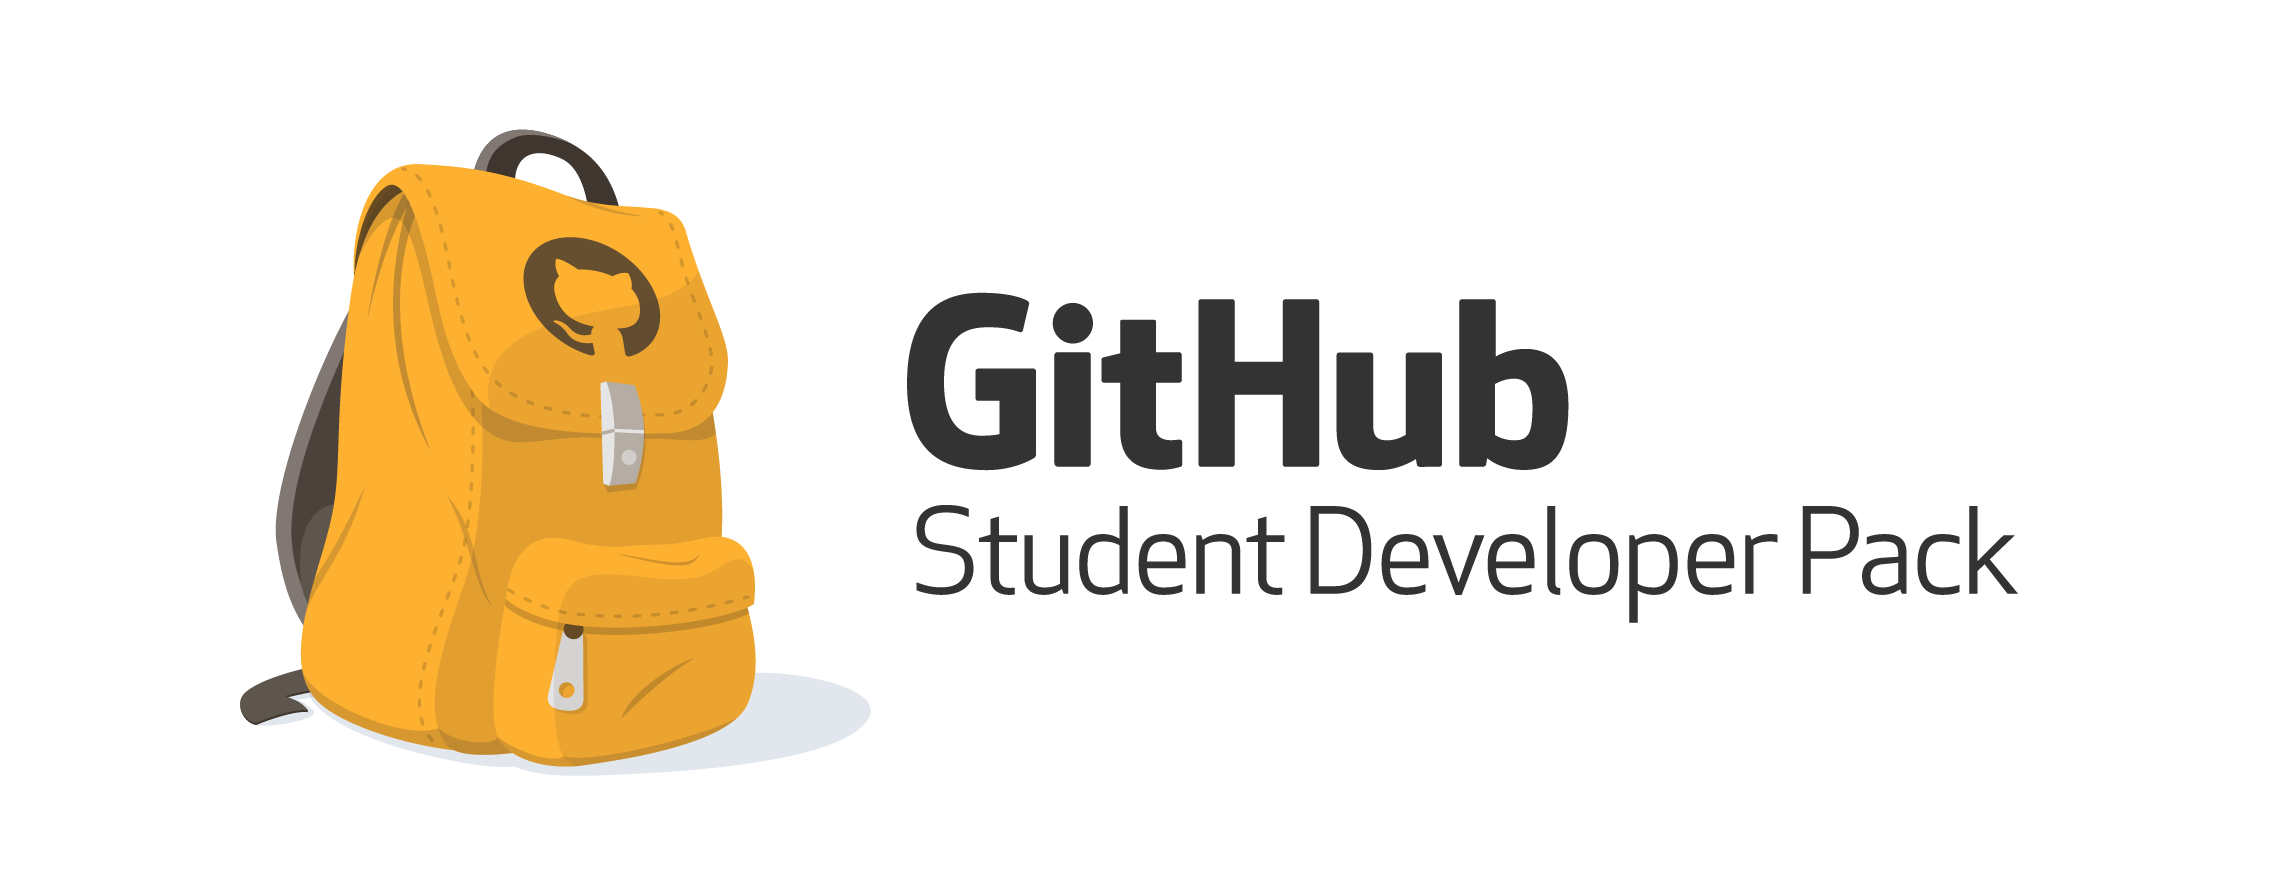 GitHub Student